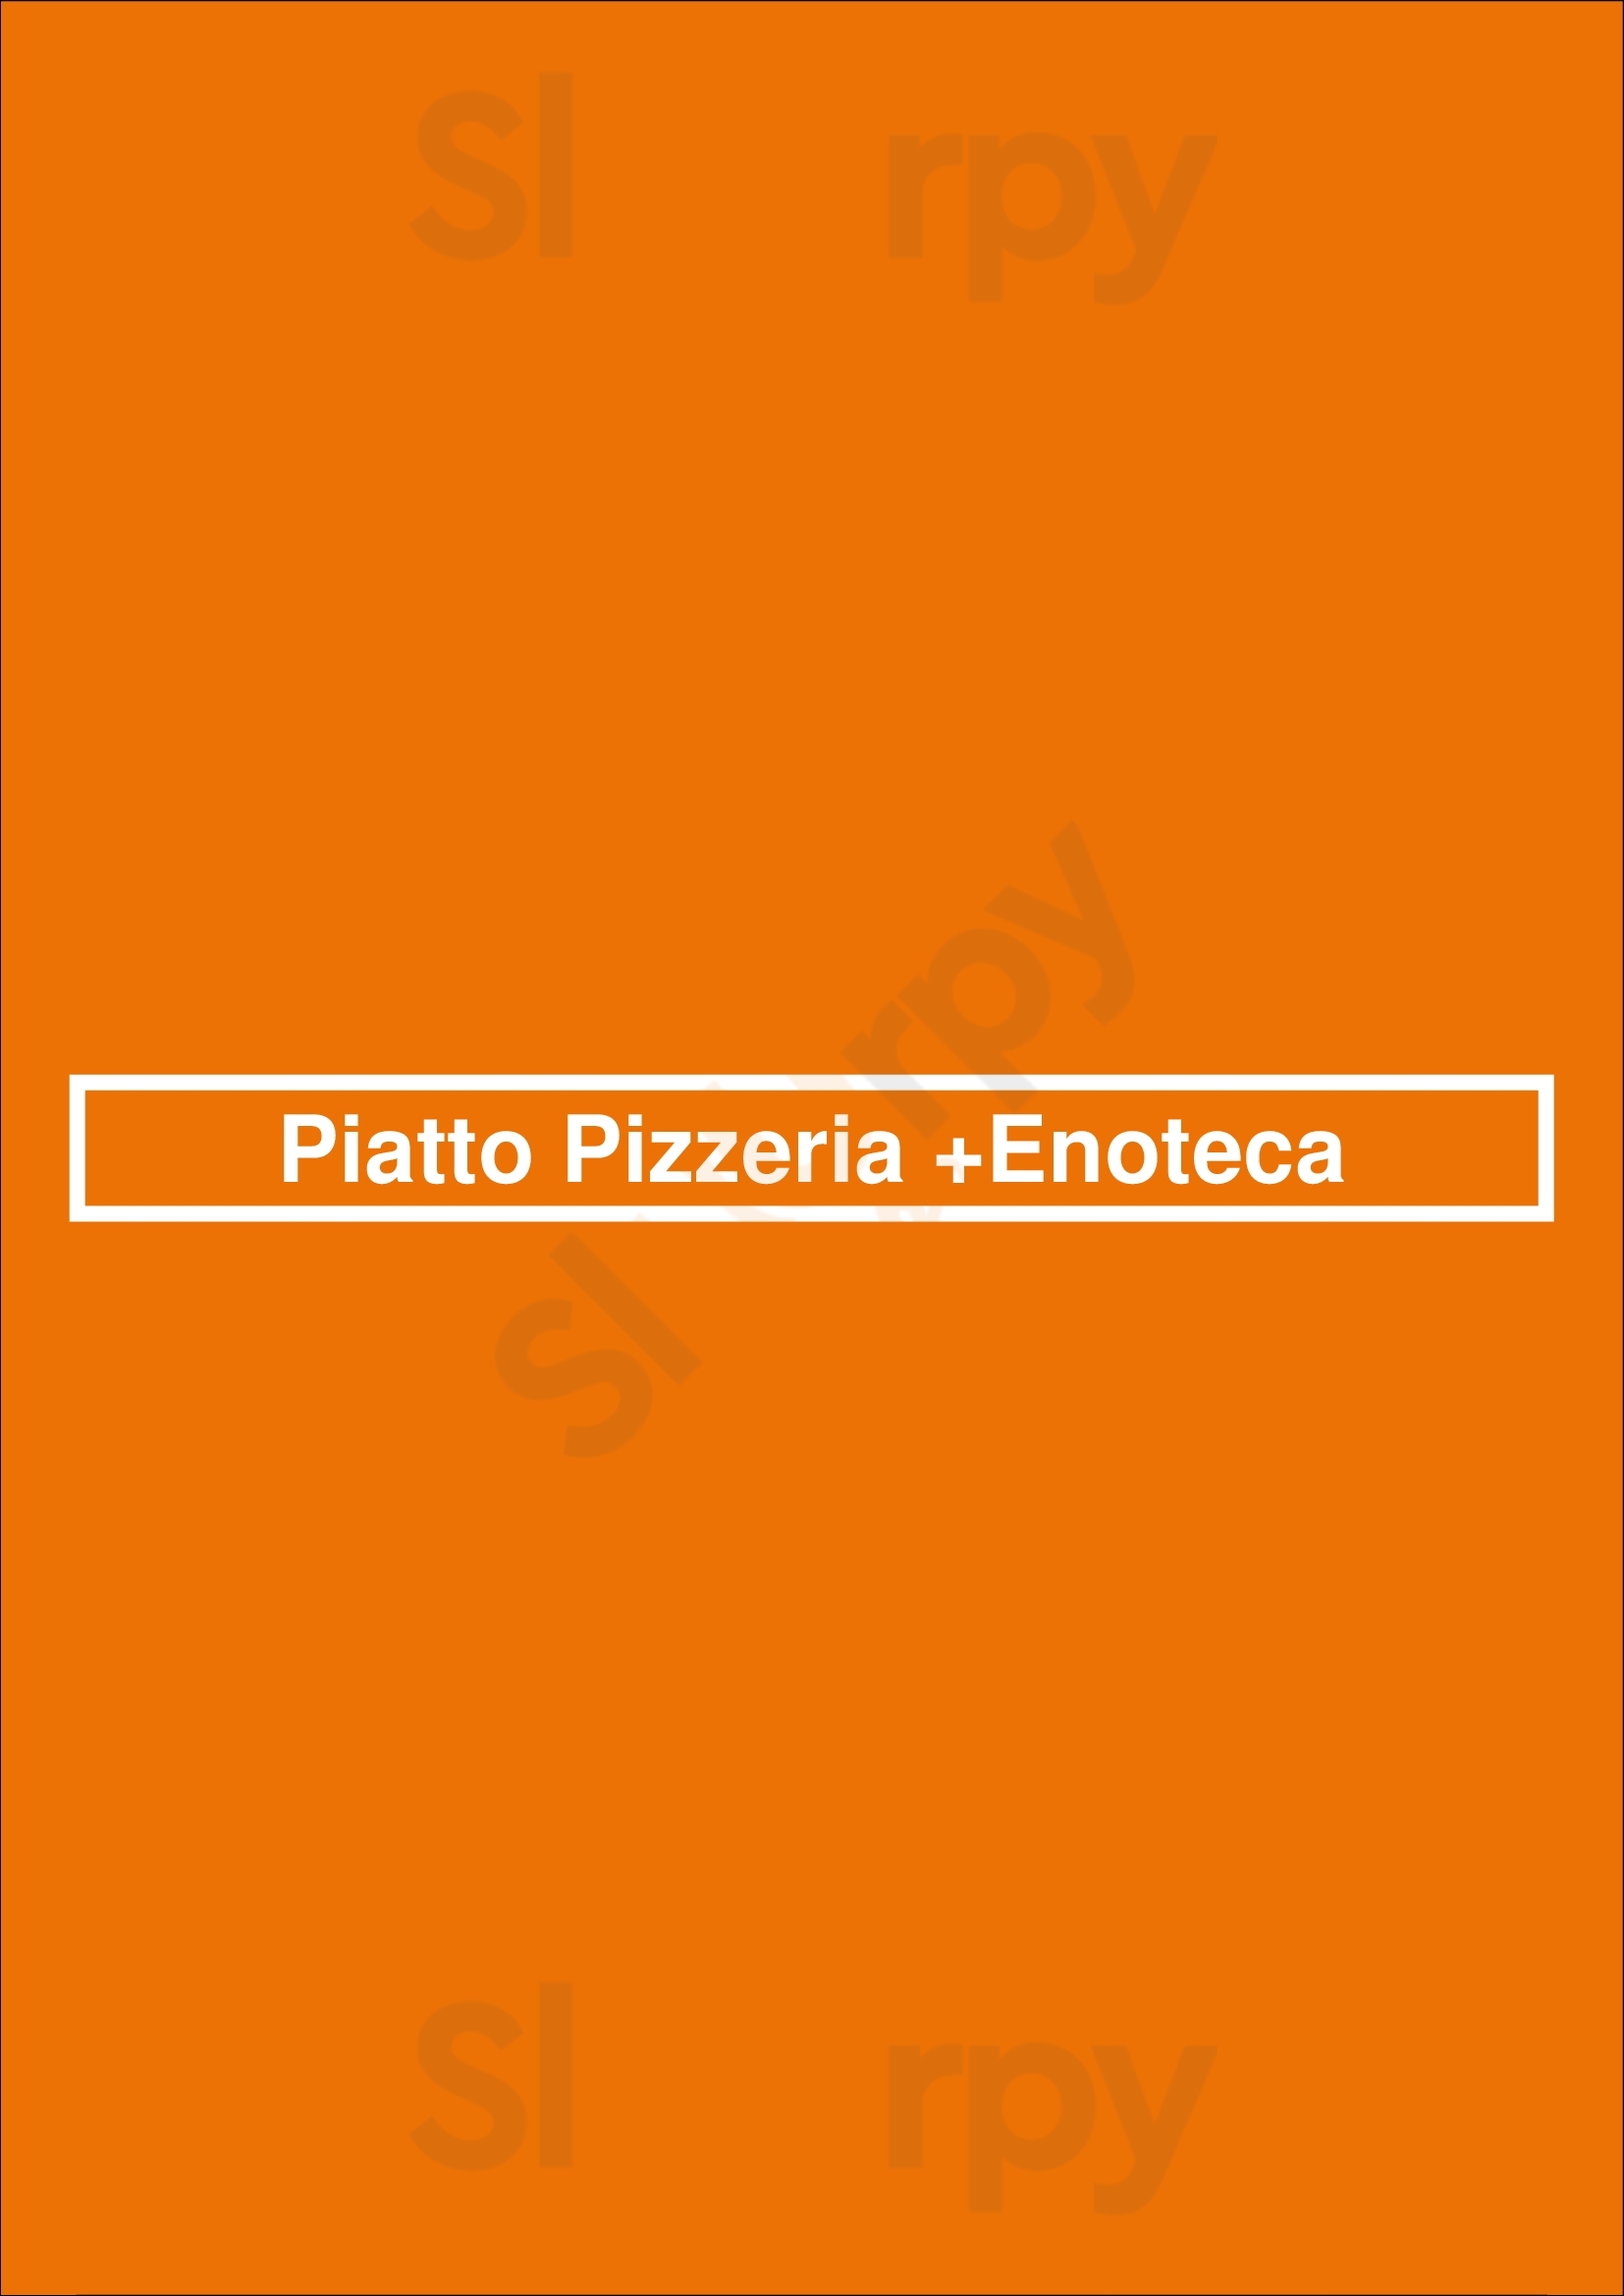 Piatto Pizzeria +enoteca Cambridge Menu - 1